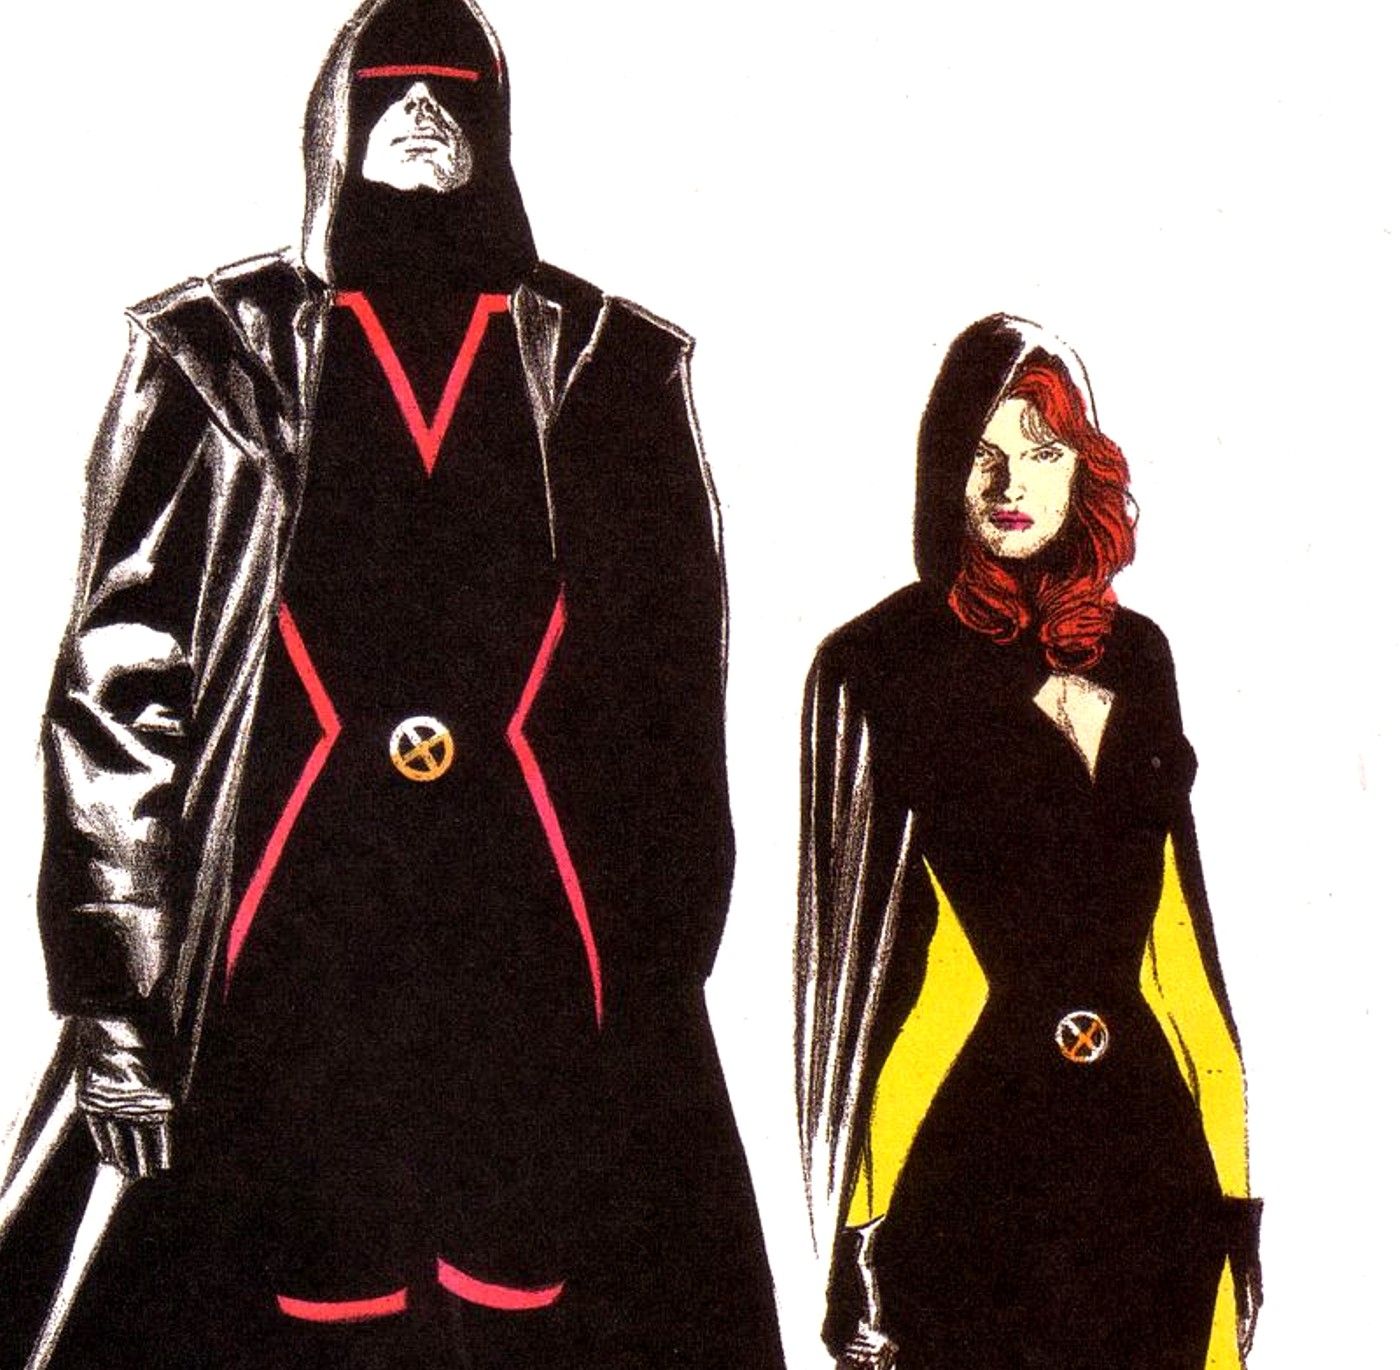 Cyclops’ Iconic Alex Ross Costume Returns in Fanart of Forgotten Design